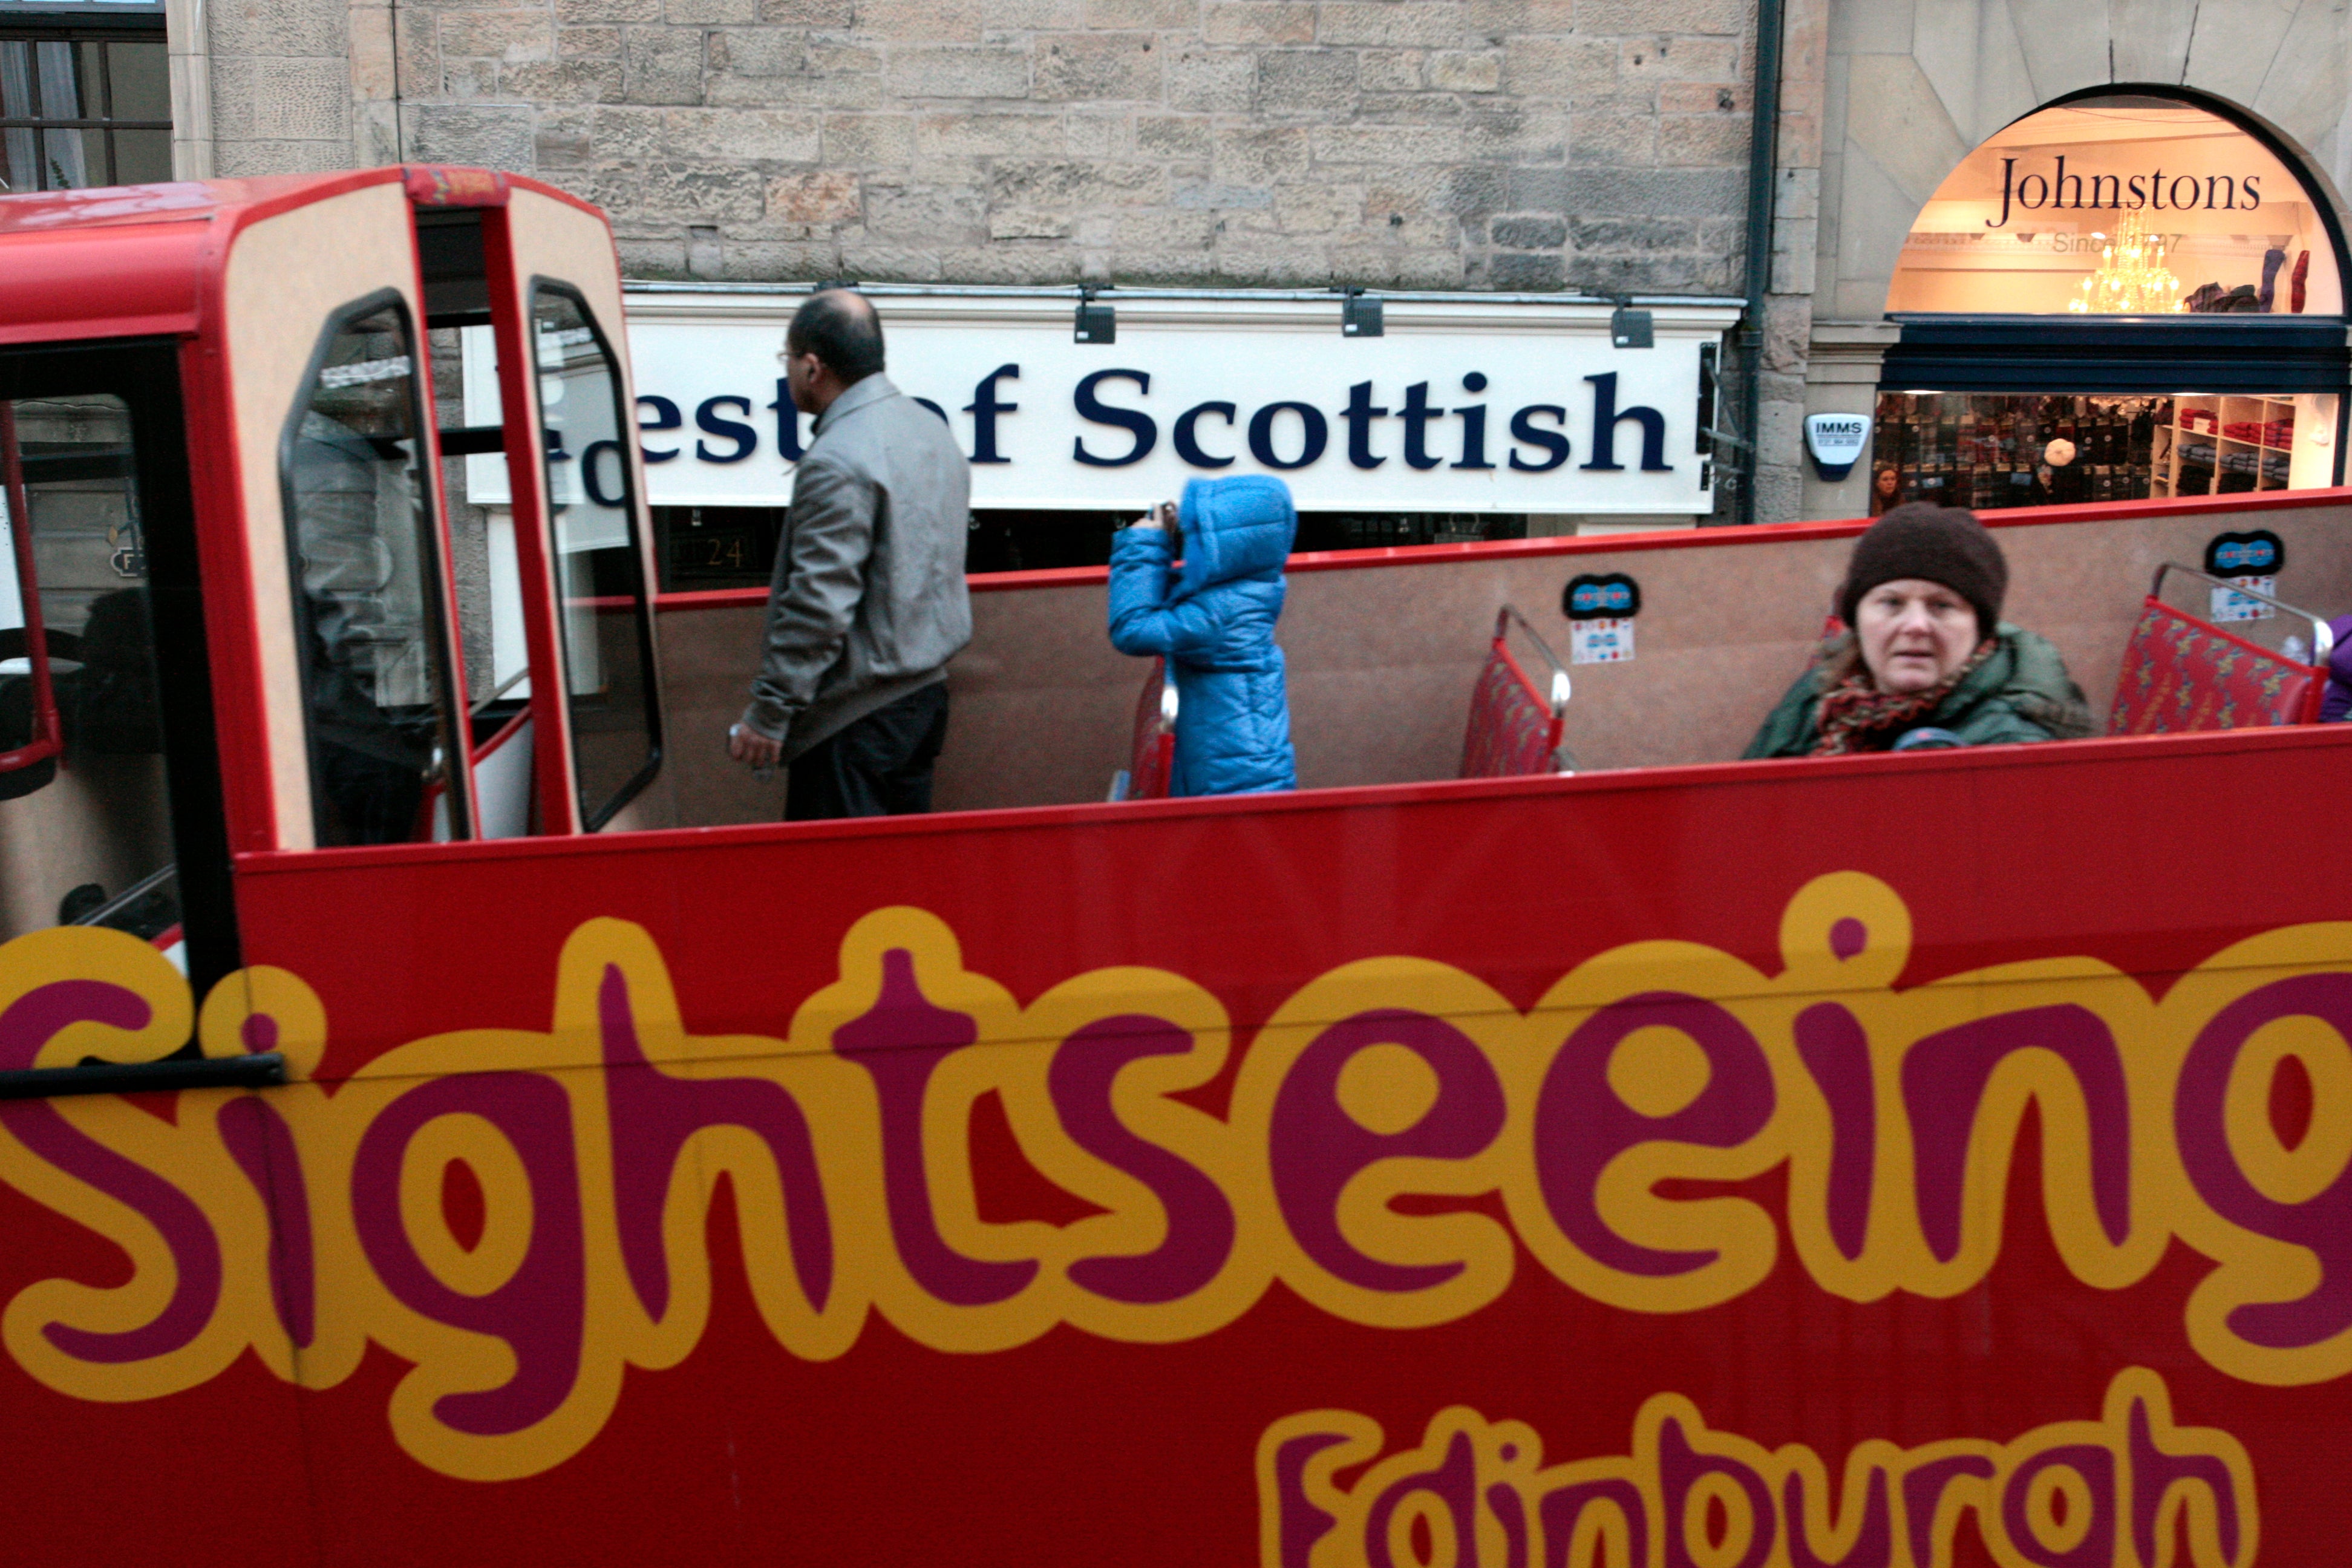 An Edinburgh sightseeing tour bus drives past outside the Scottish Parliament in Edinburgh (David Cheskin/PA)